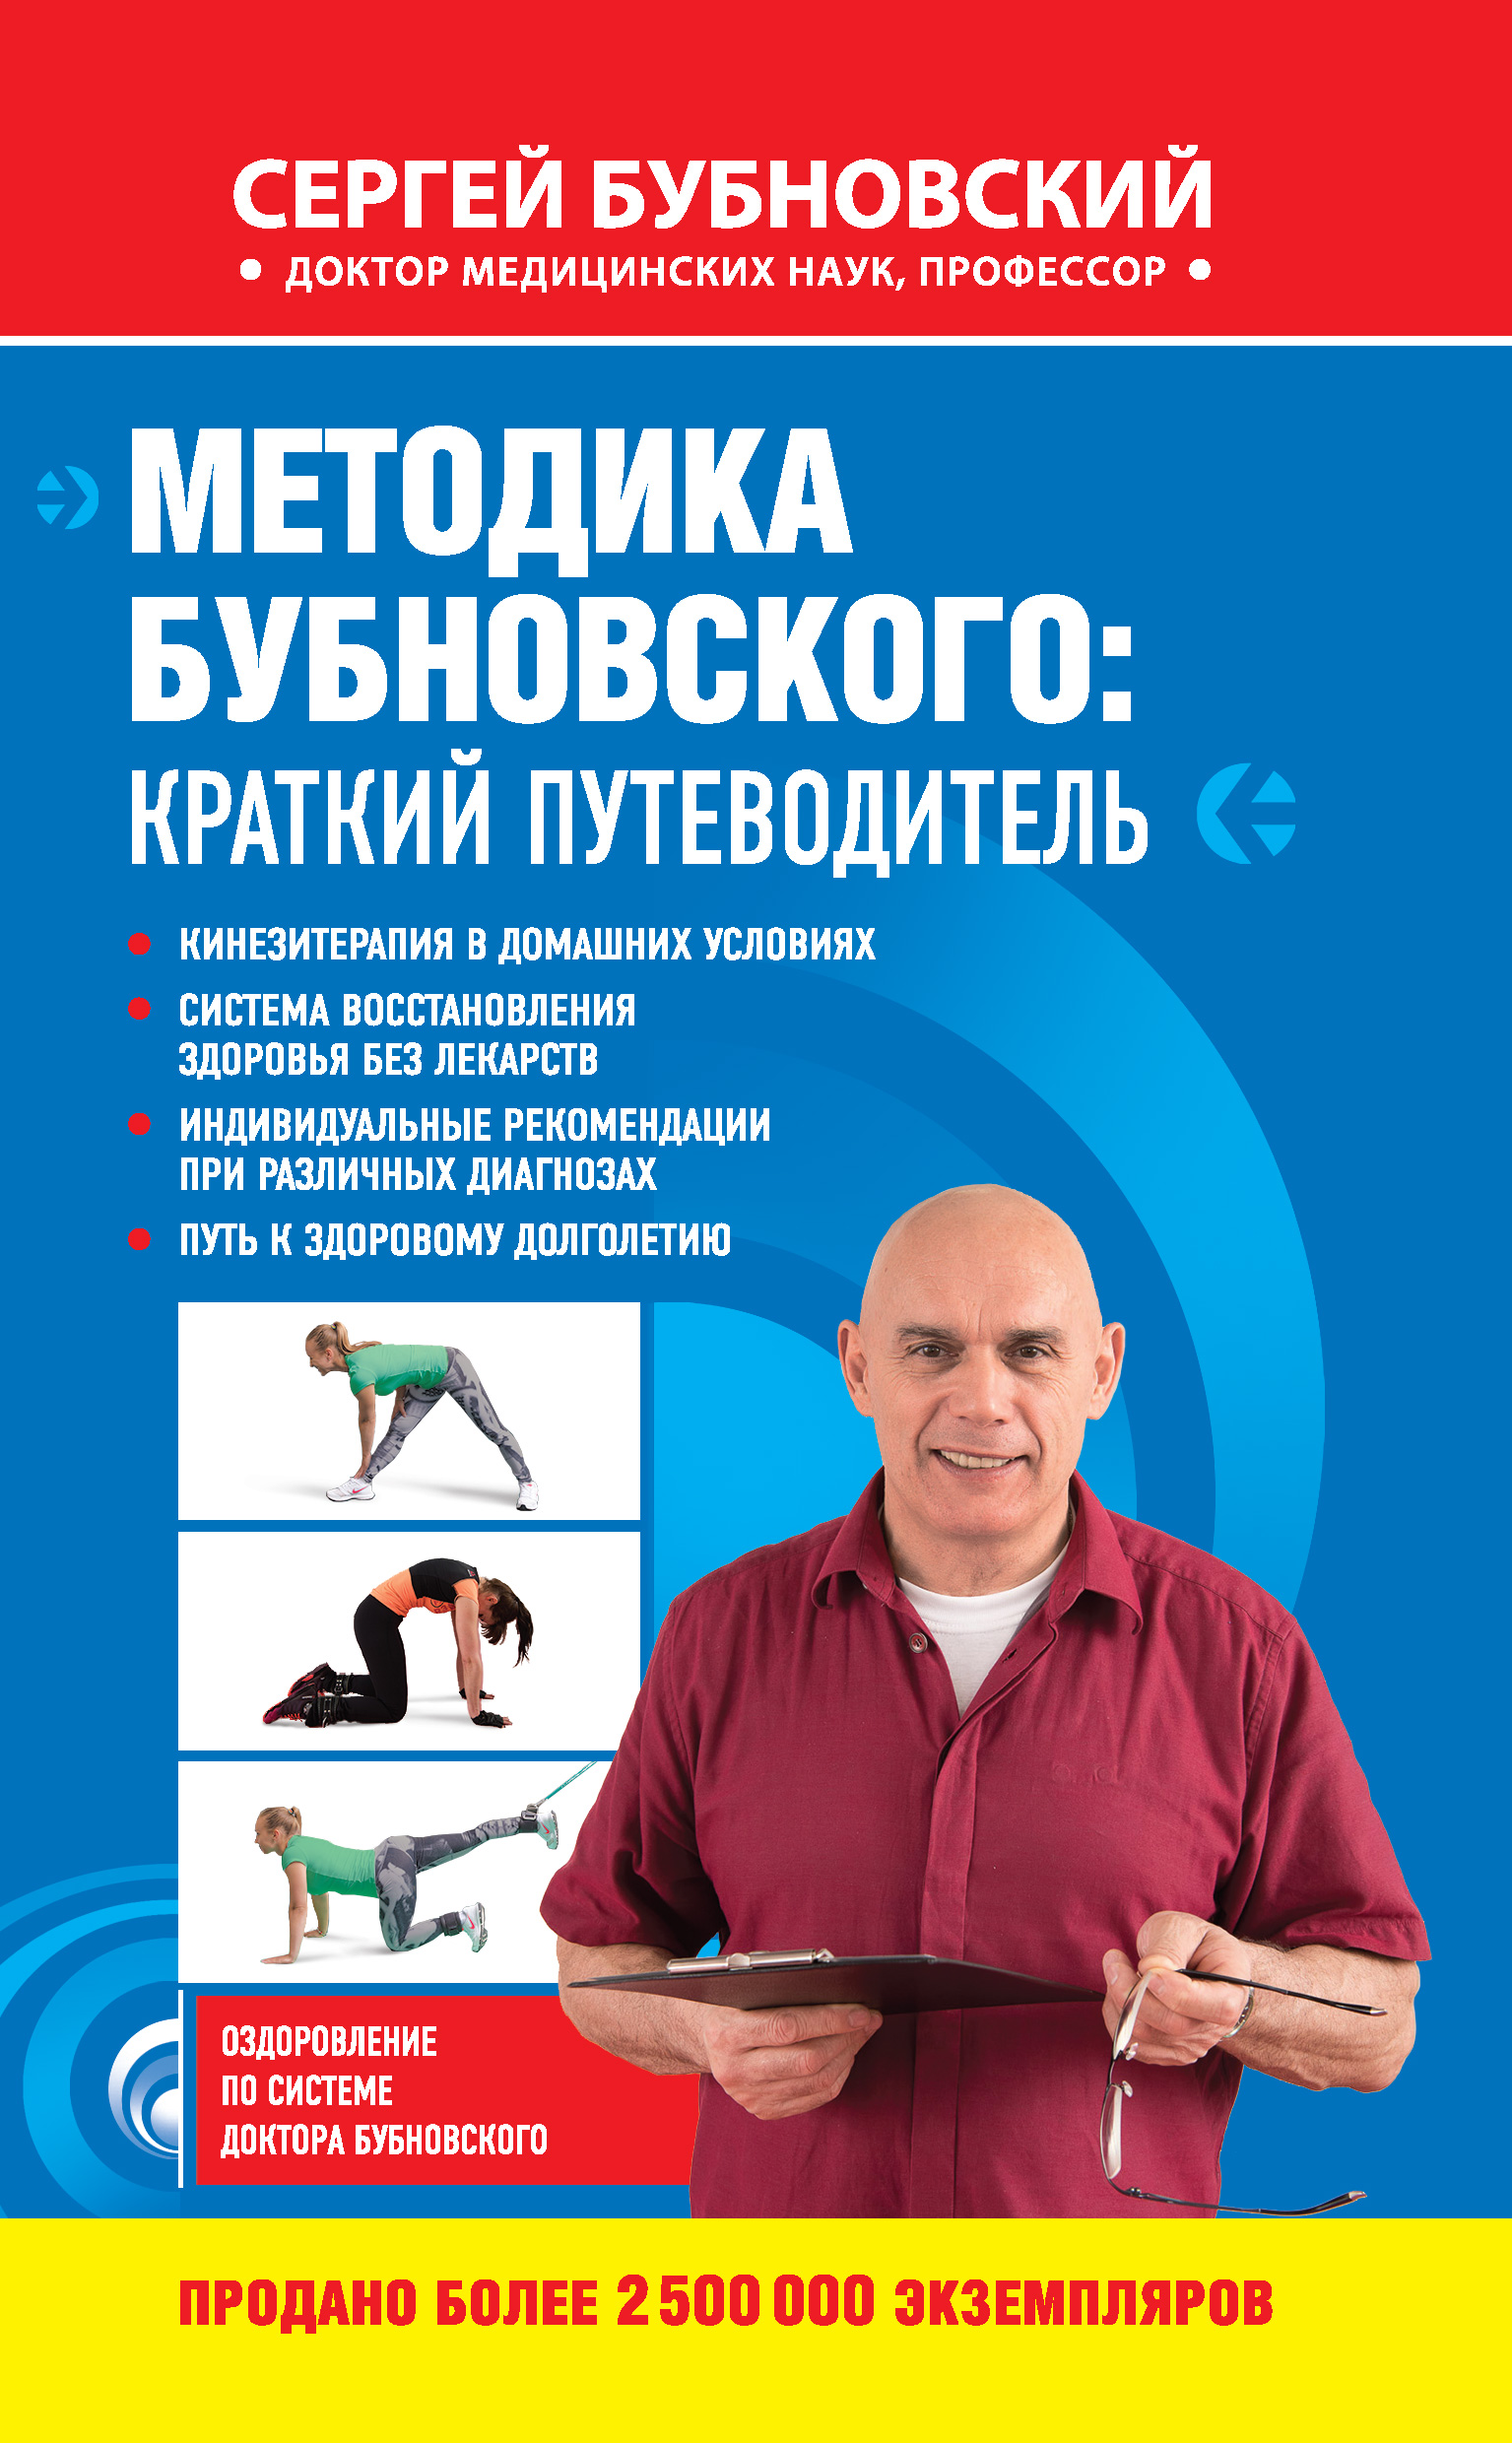 20 упражнений Бубновского для дома, видео | ТОП упражнения Бубновского